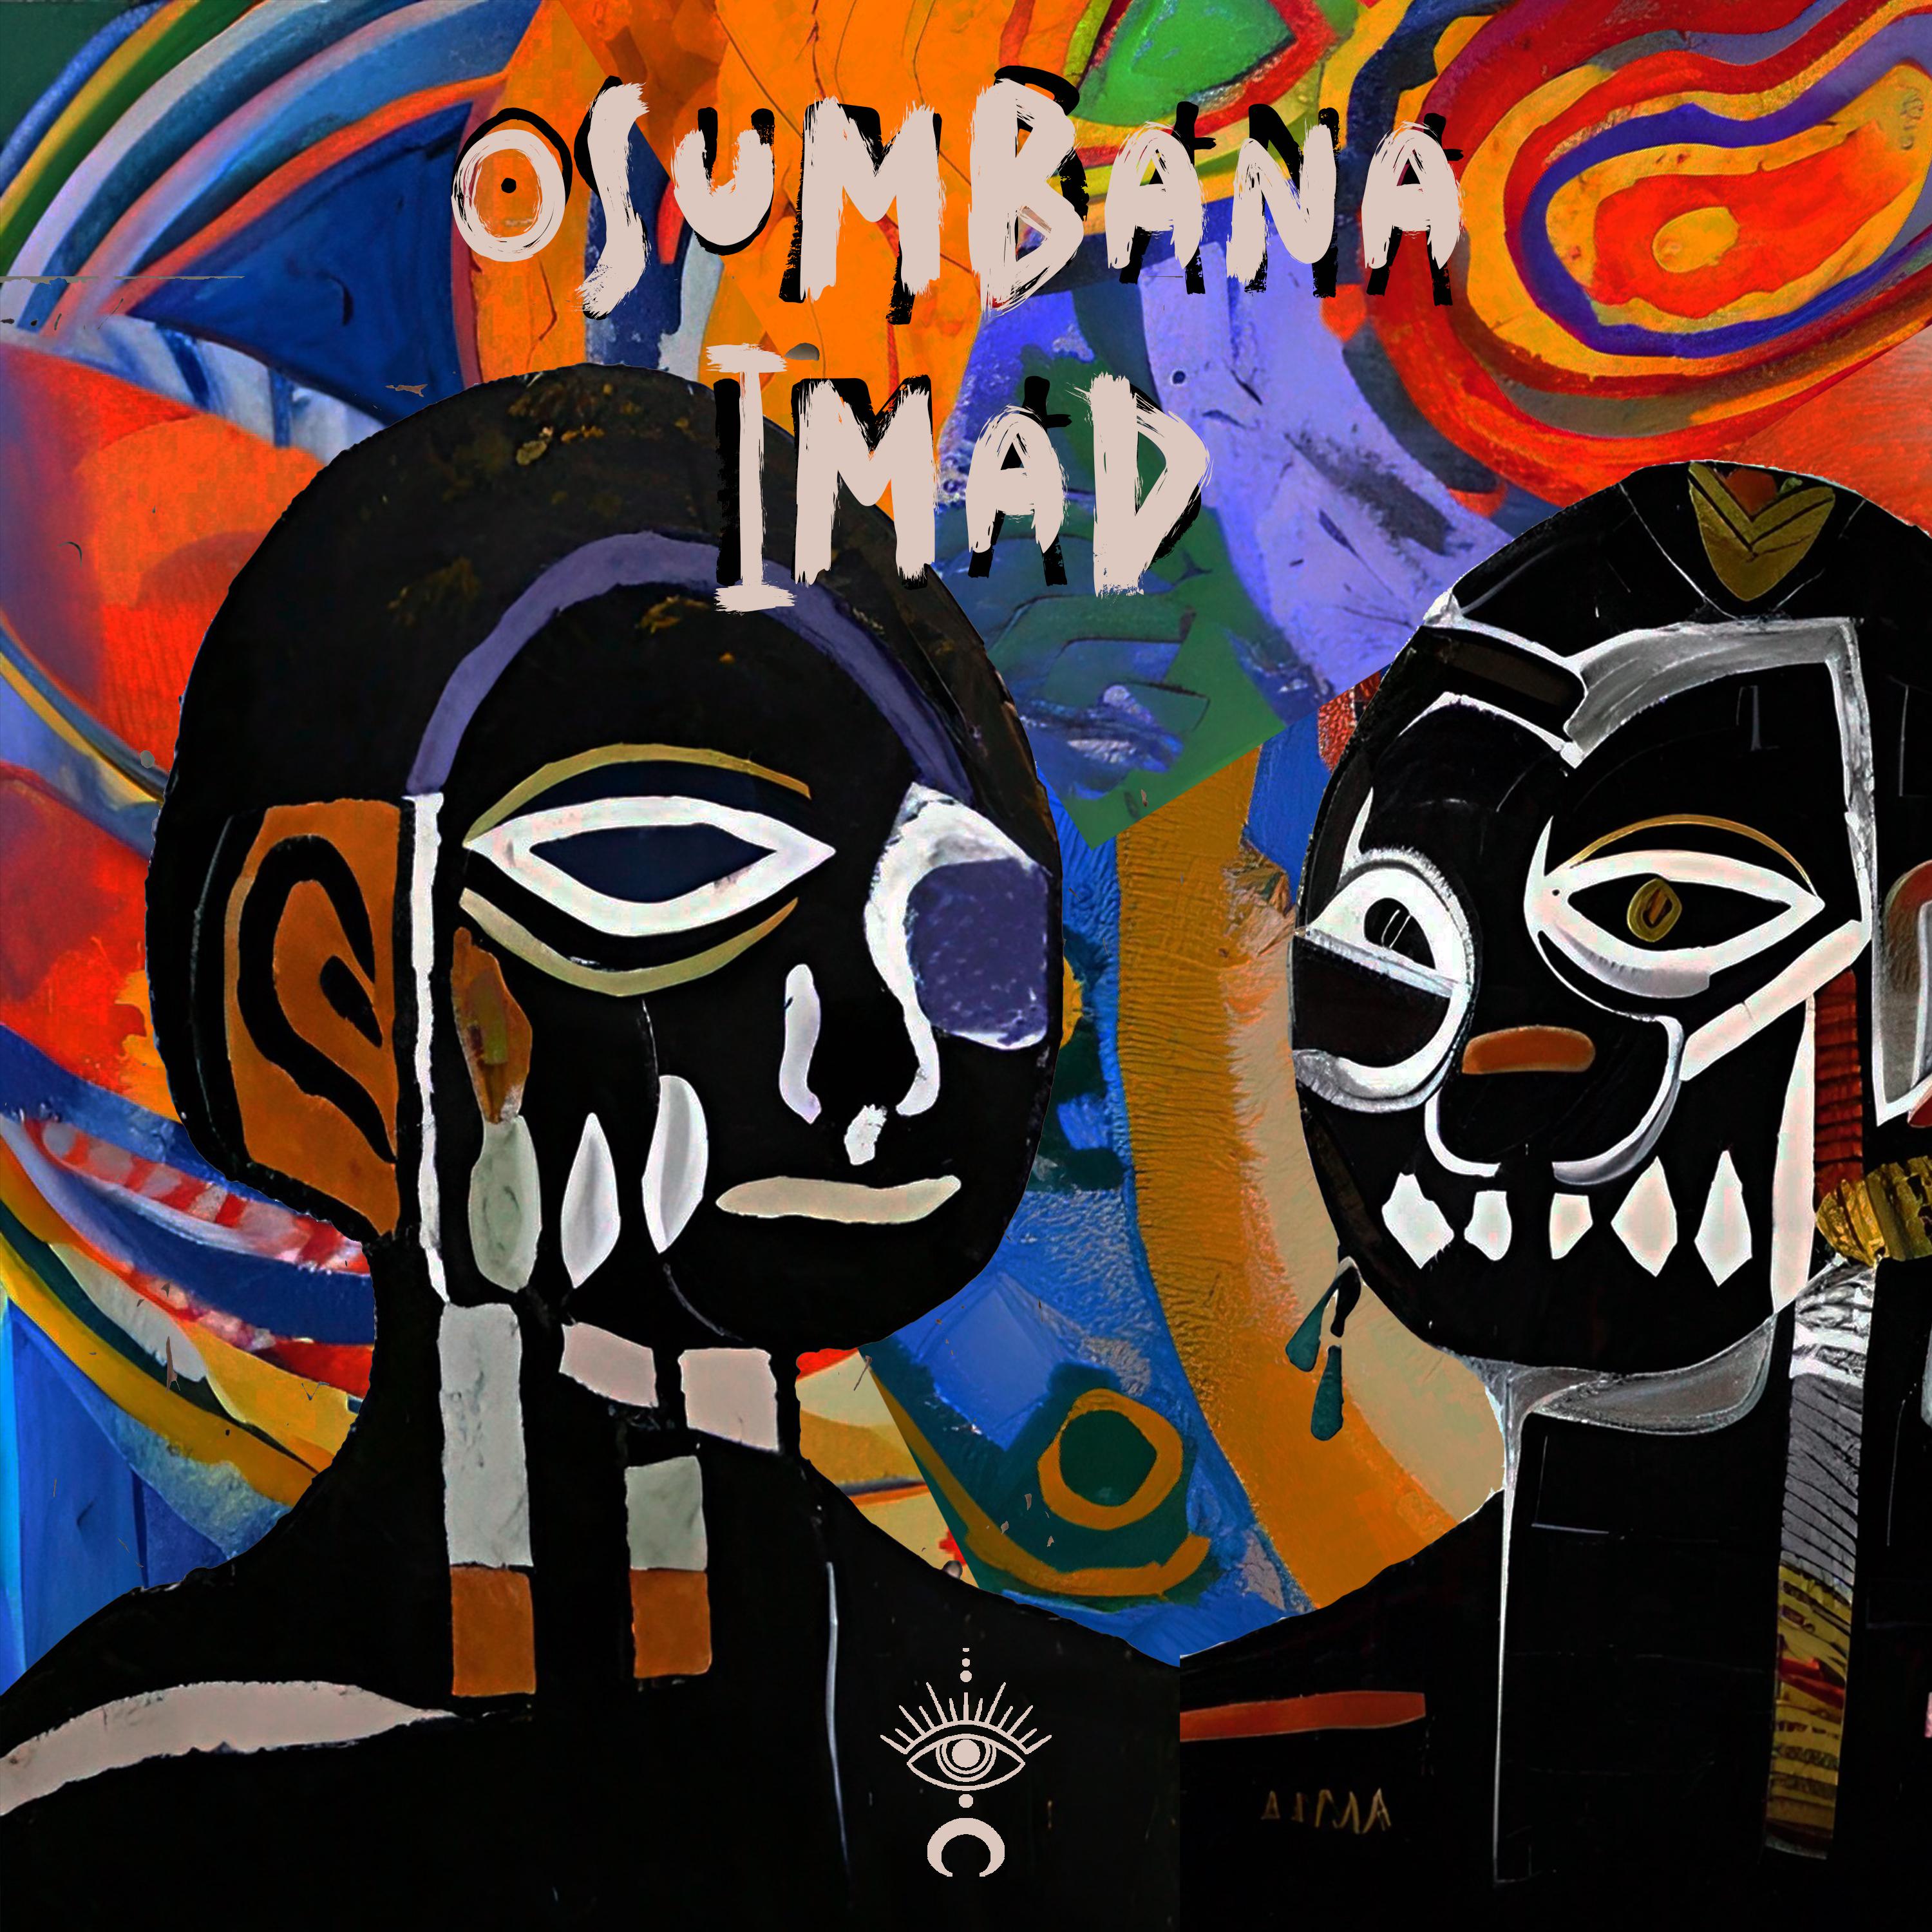 Постер альбома Osumbana